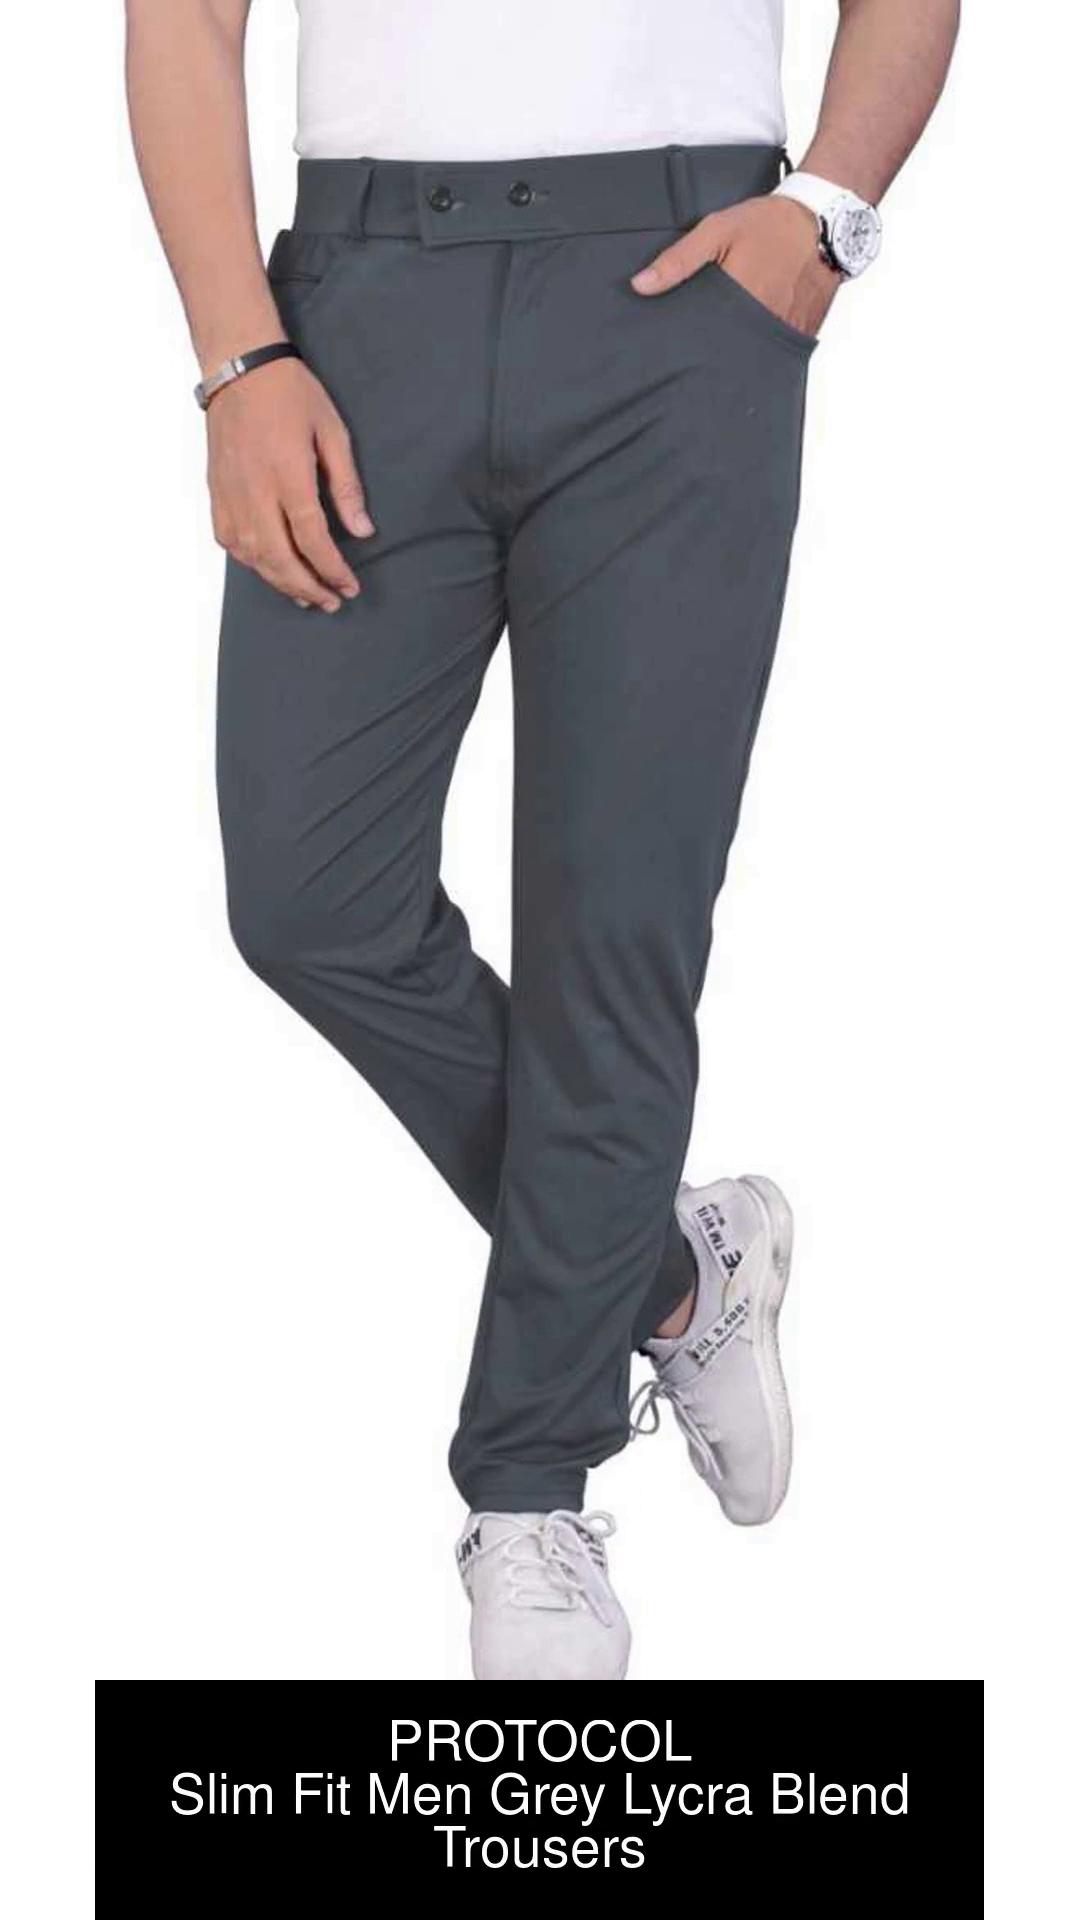 Buy Brown Solid Slim Fit Trousers for Men Online at Killer Jeans  490792